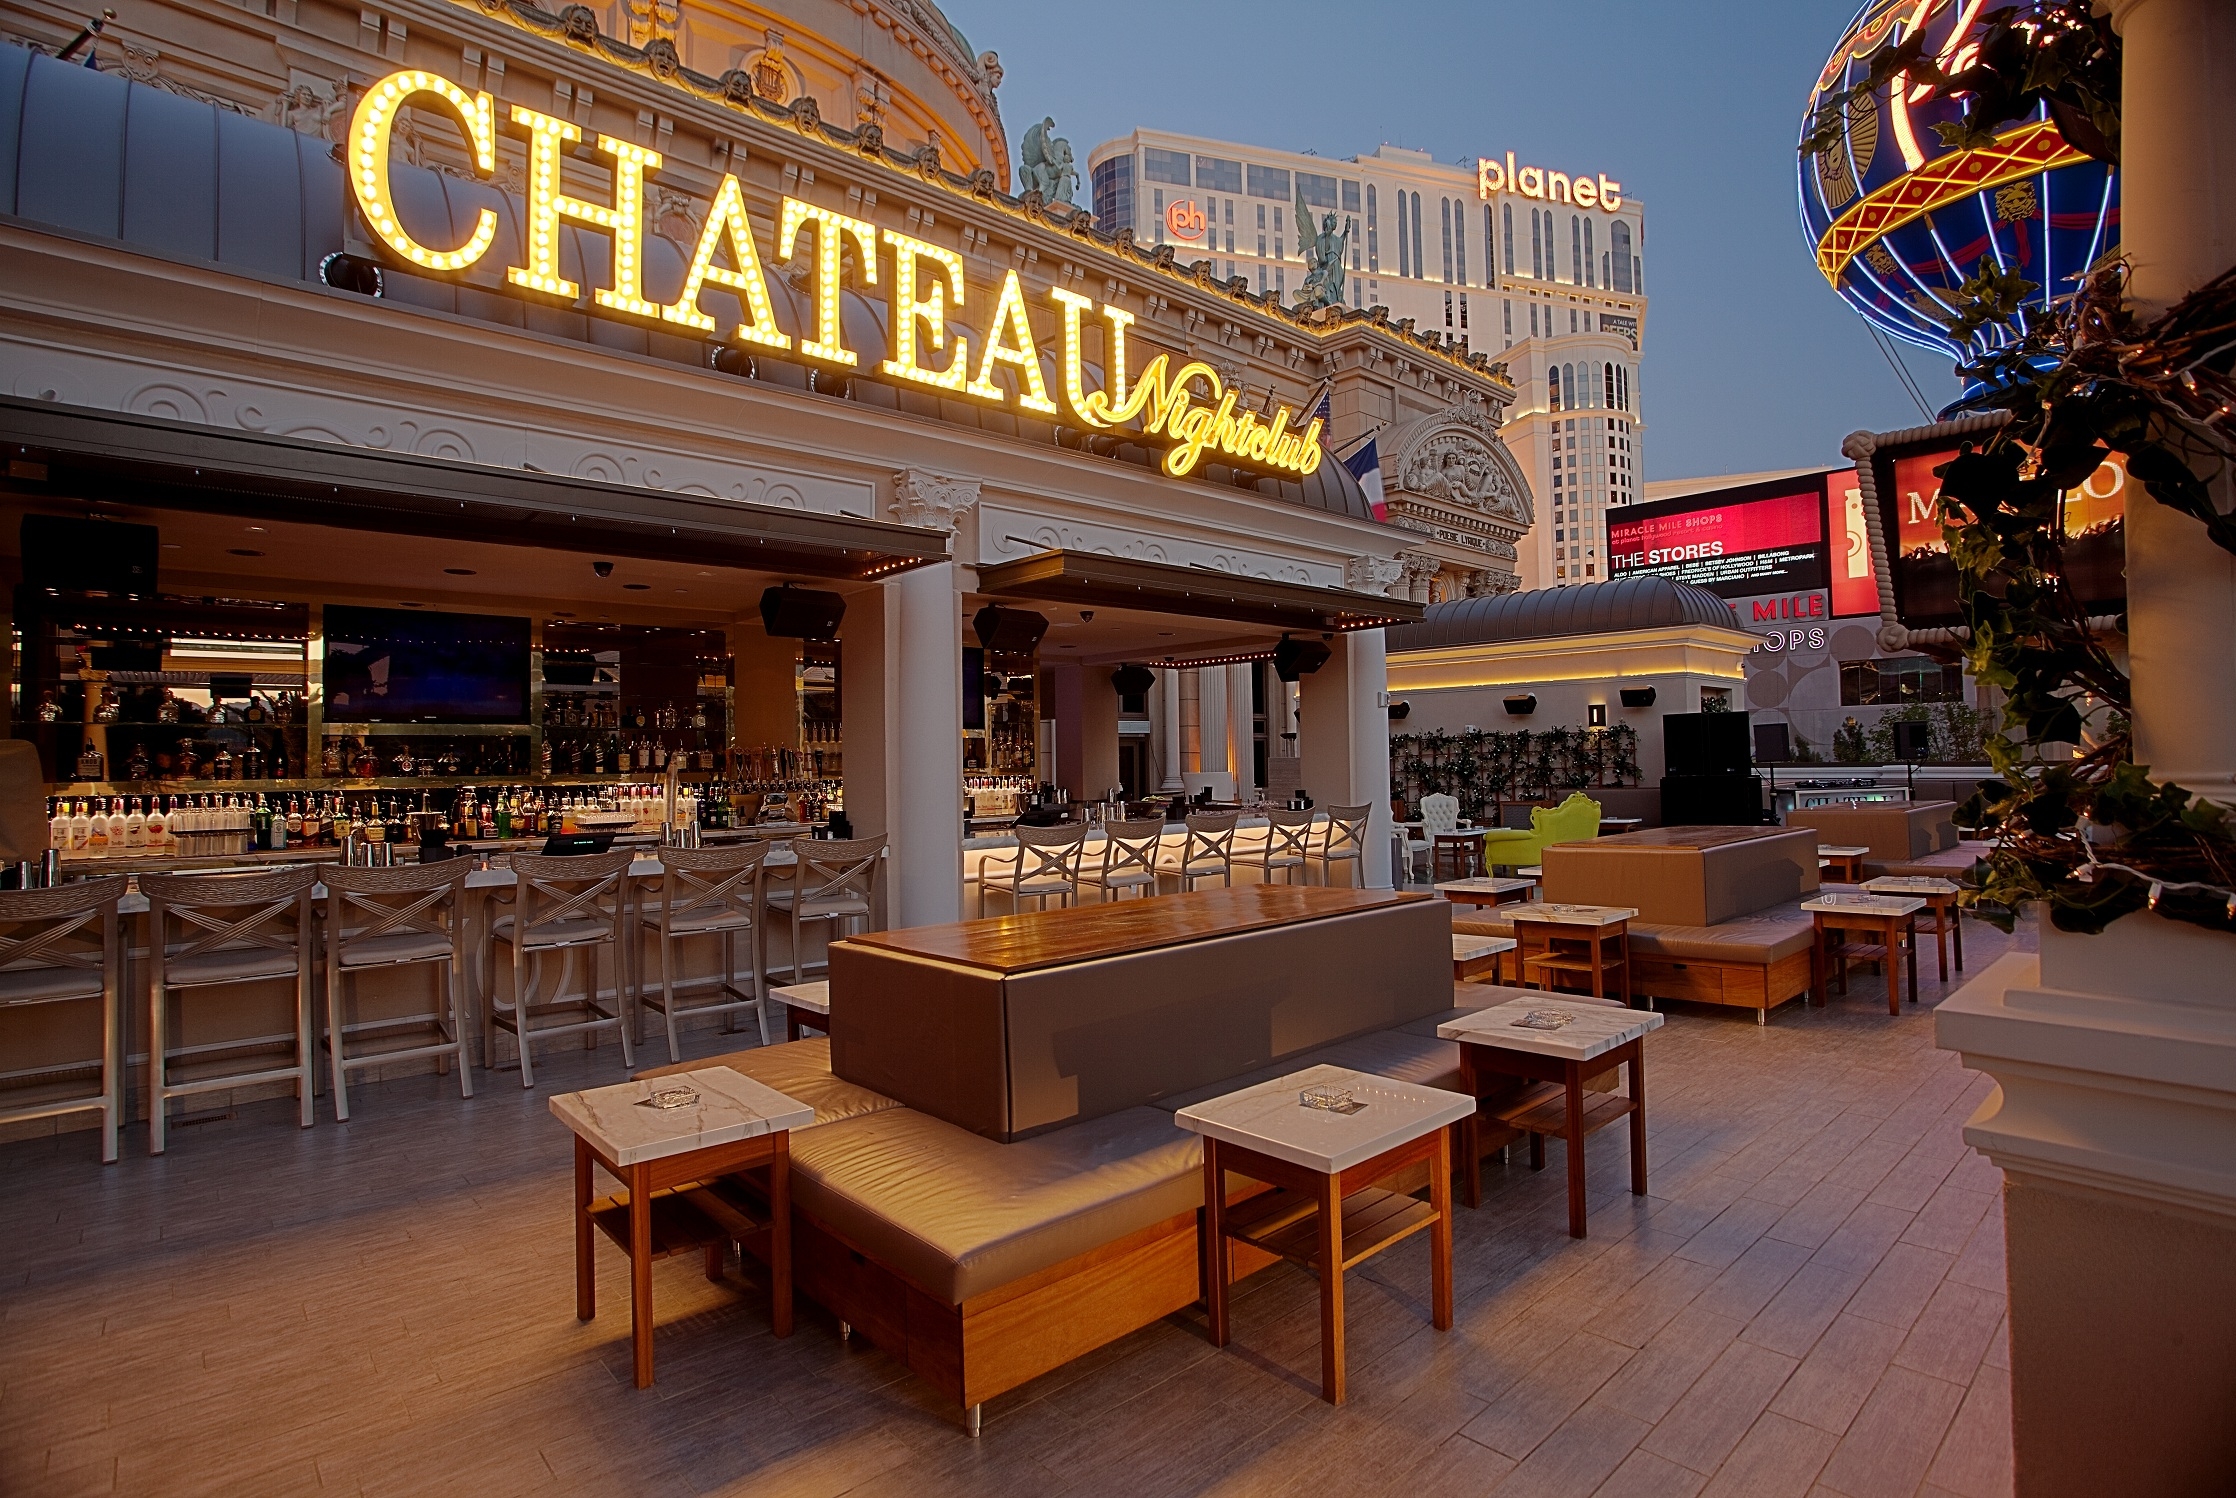 Gustav's Las Vegas Bar - Paris Las Vegas Hotel & Casino